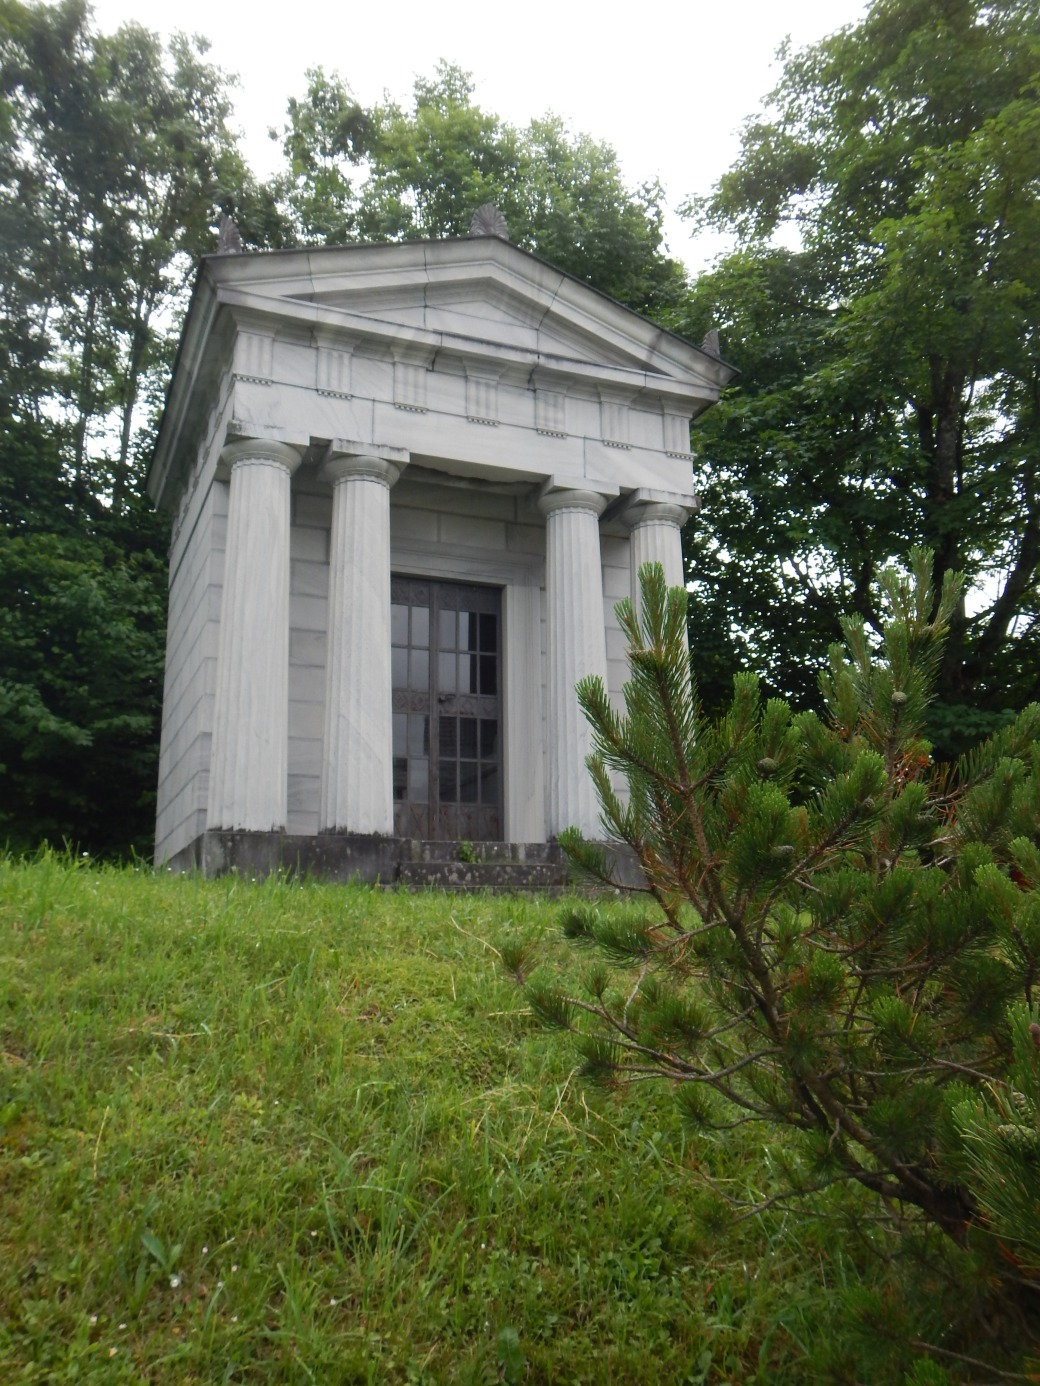 Chlumecky Mausoleum 1